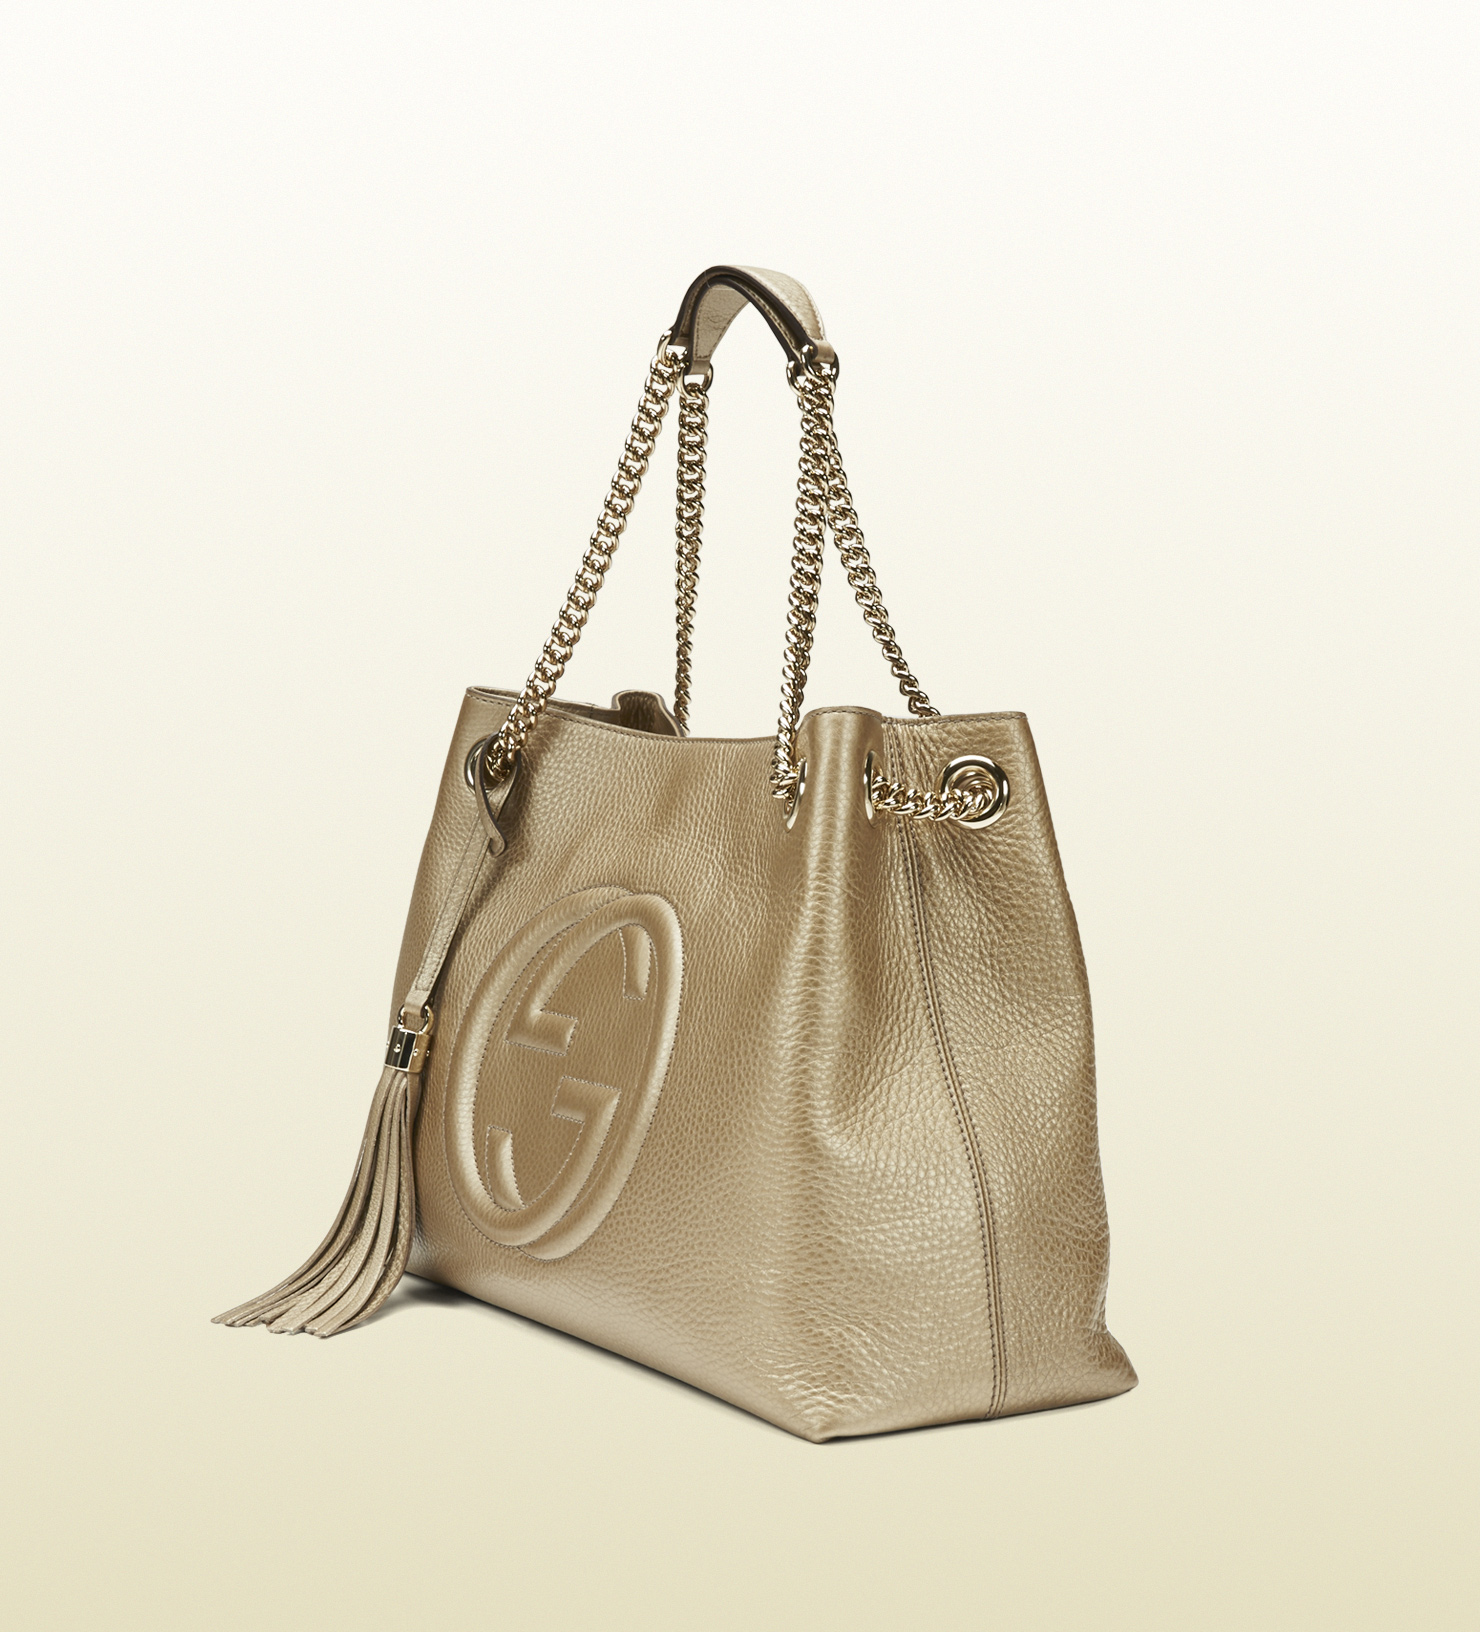 Gucci Soho Metallic Leather Shoulder Bag in Beige (Natural) - Lyst